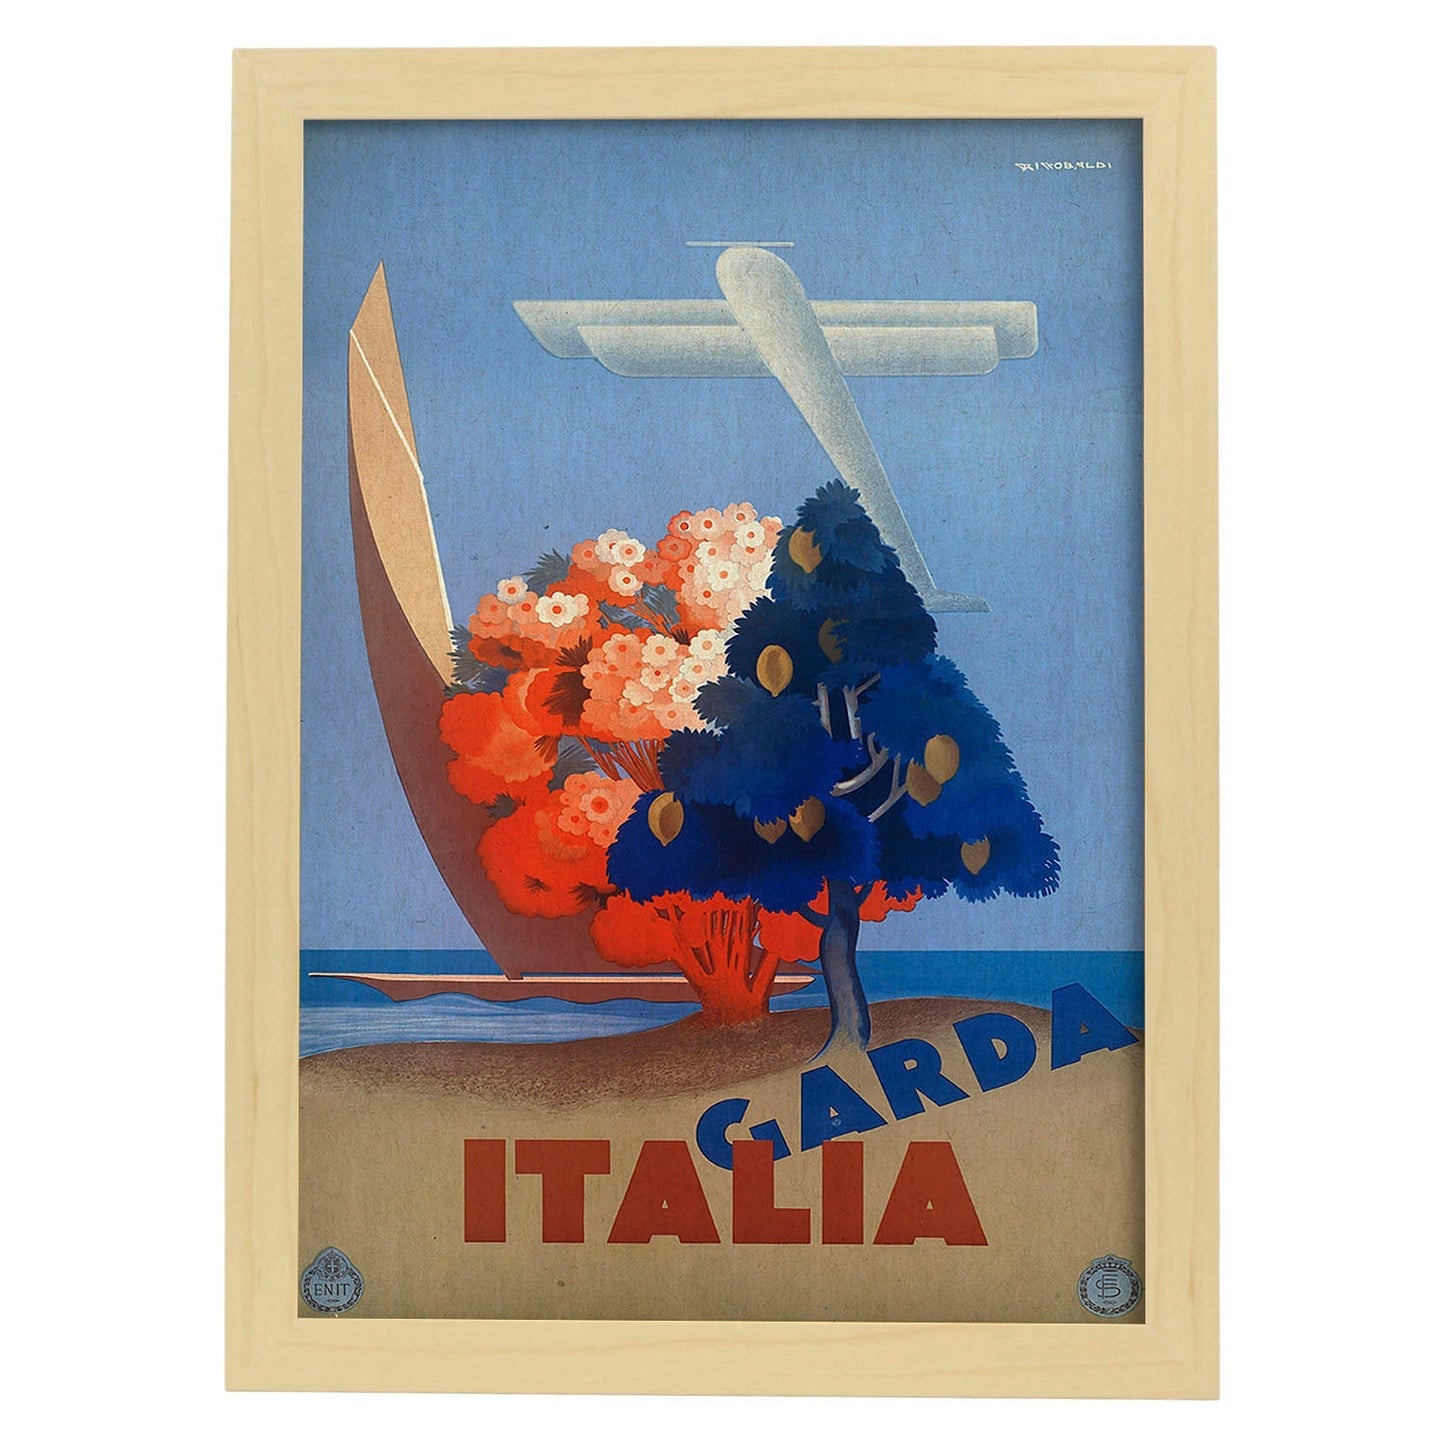 Poster vintage. Cartel vintage de Francia e Italia. Viaja a Grada.-Artwork-Nacnic-A3-Marco Madera clara-Nacnic Estudio SL